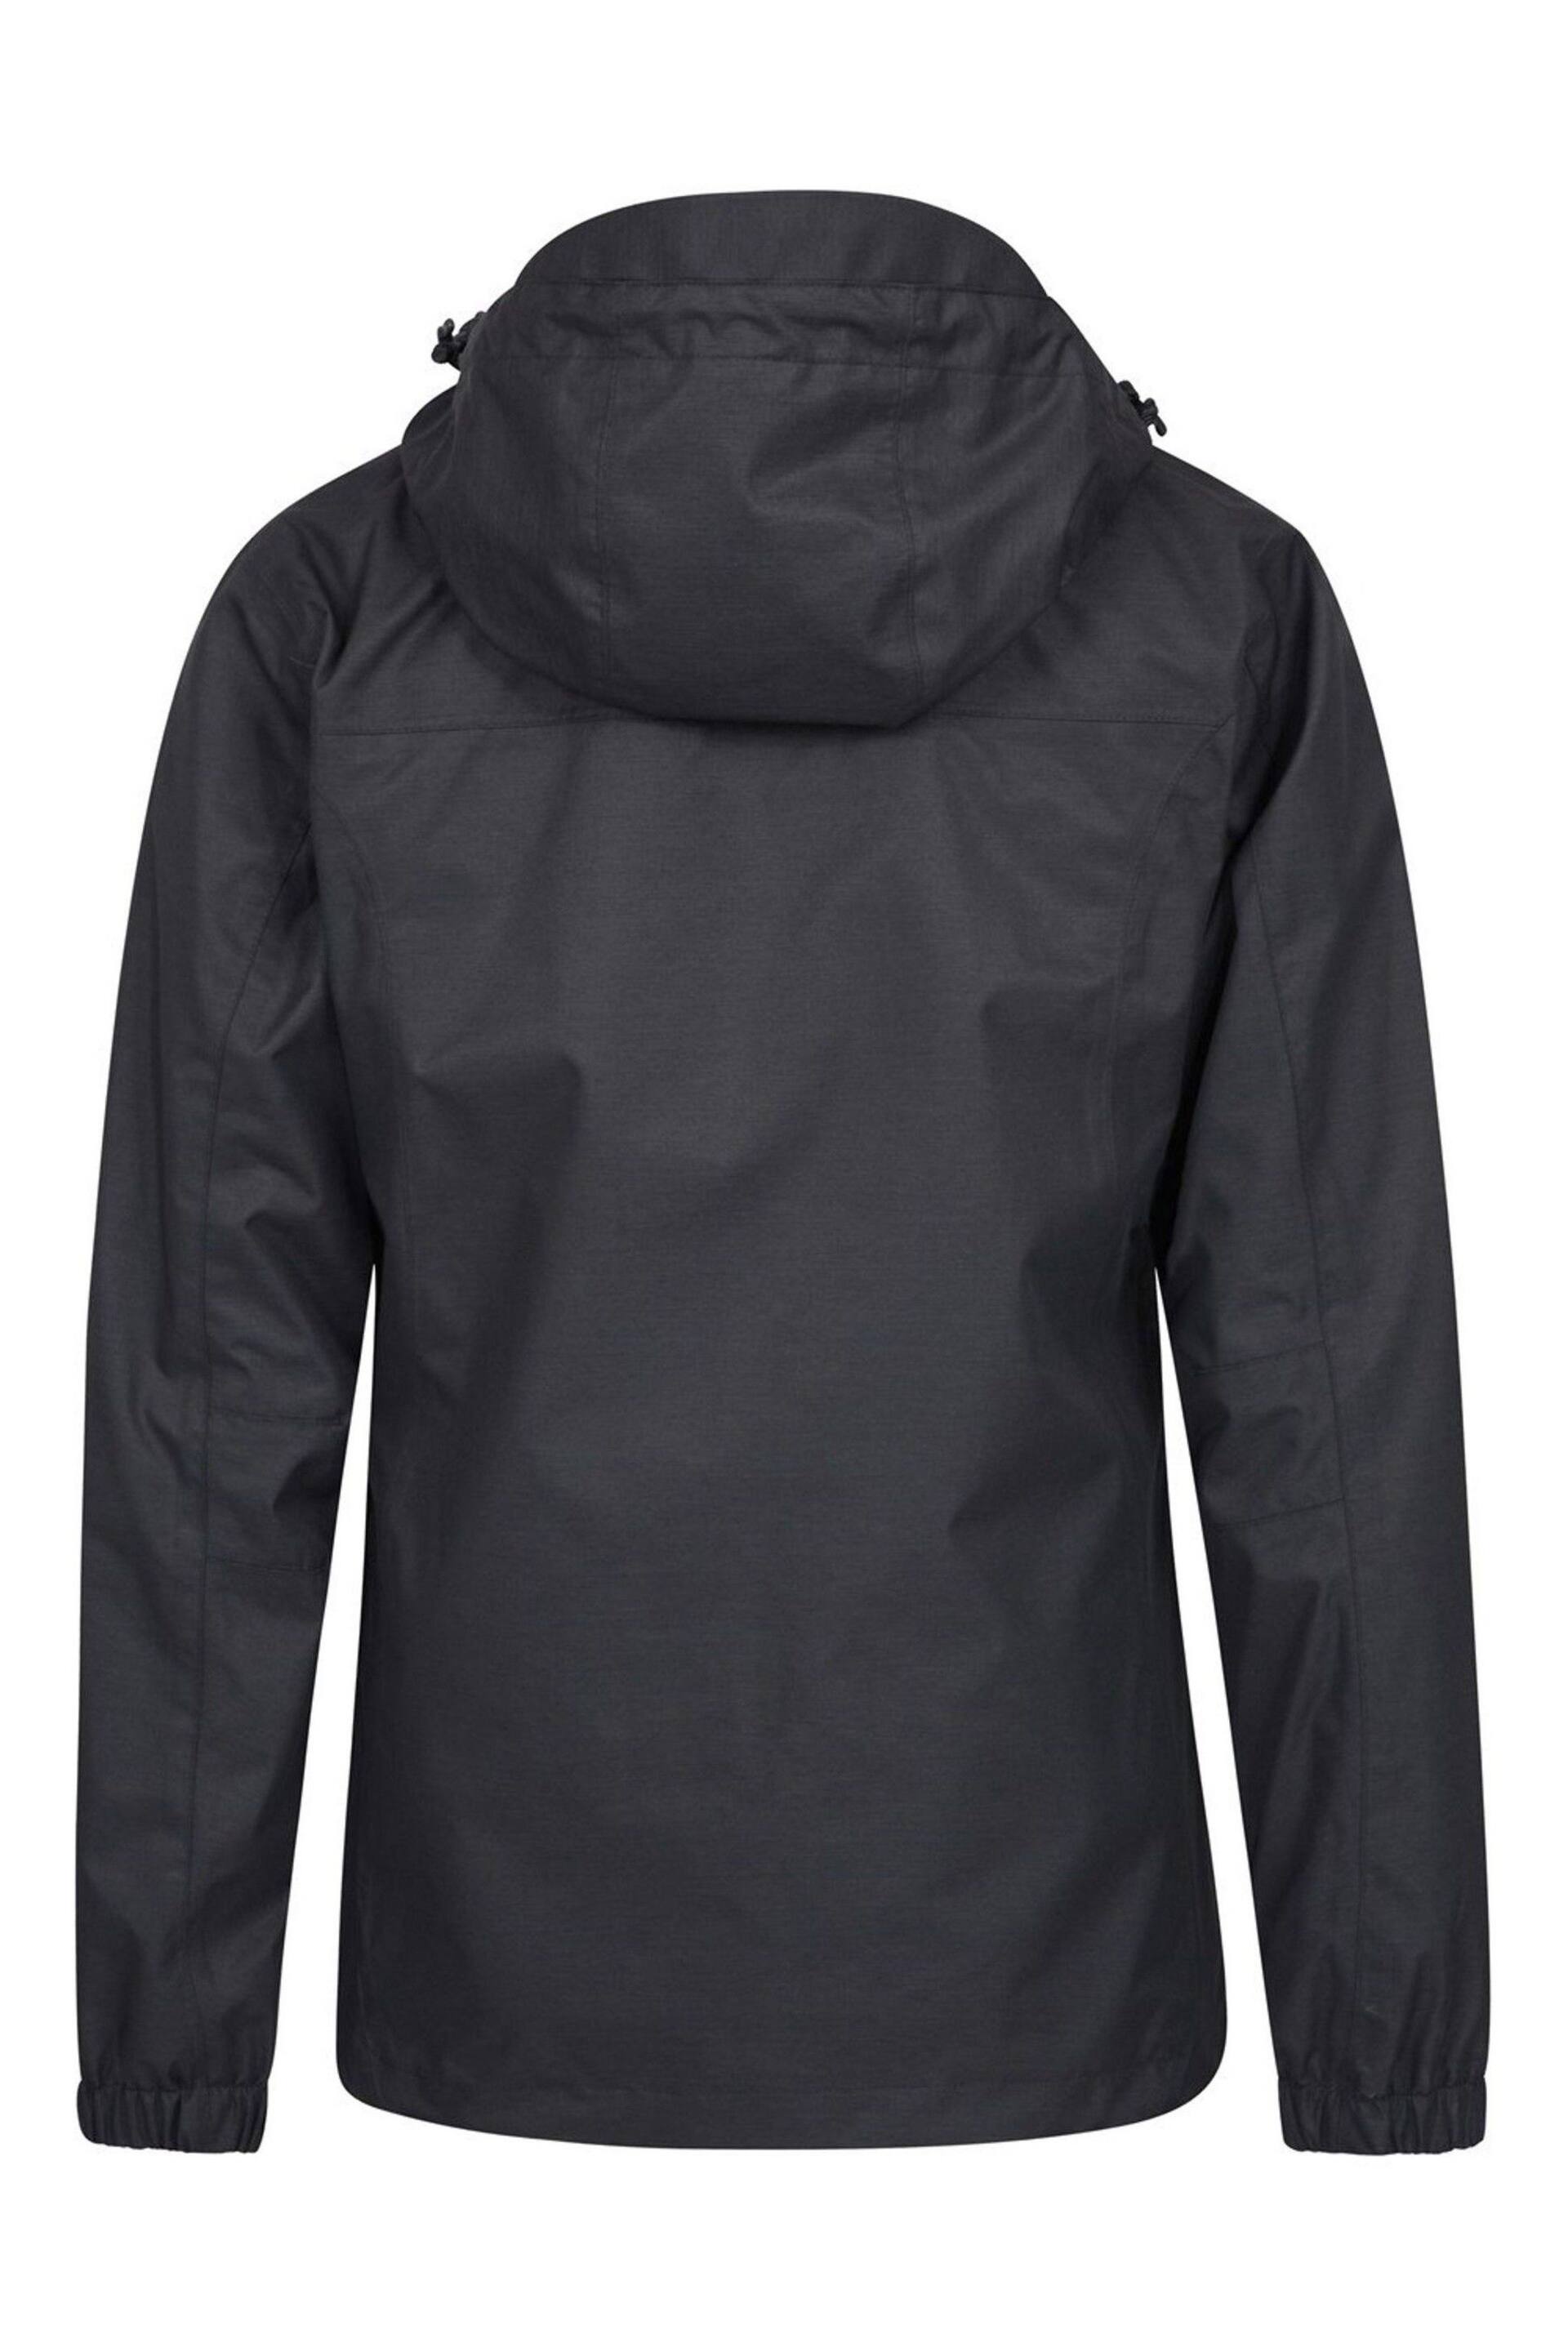 Mountain Warehouse Black Womens Bracken Melange 3 in 1 Waterproof and Breathable Jacket - Image 3 of 4